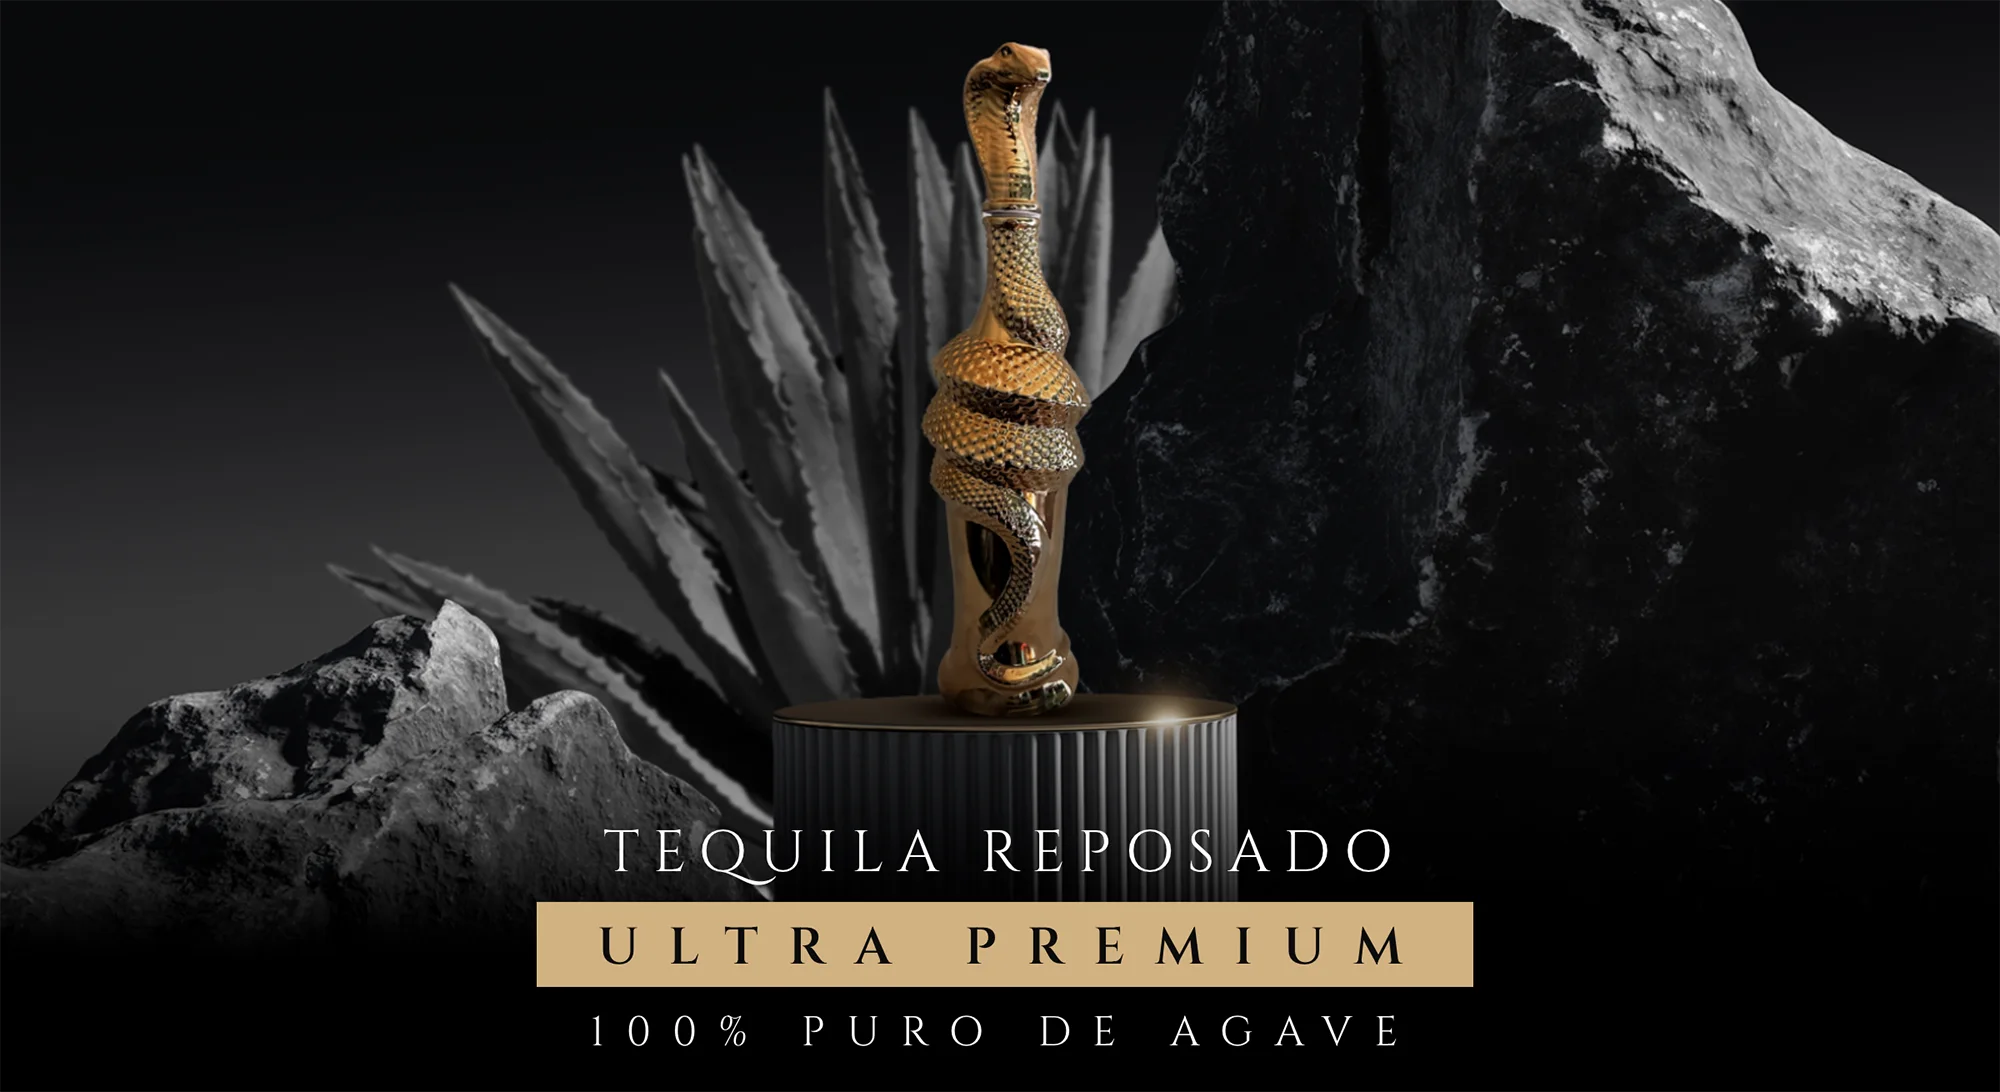 Skorpios 1618 Reposado Tequila: The Pinnacle of Artisanal Excellence